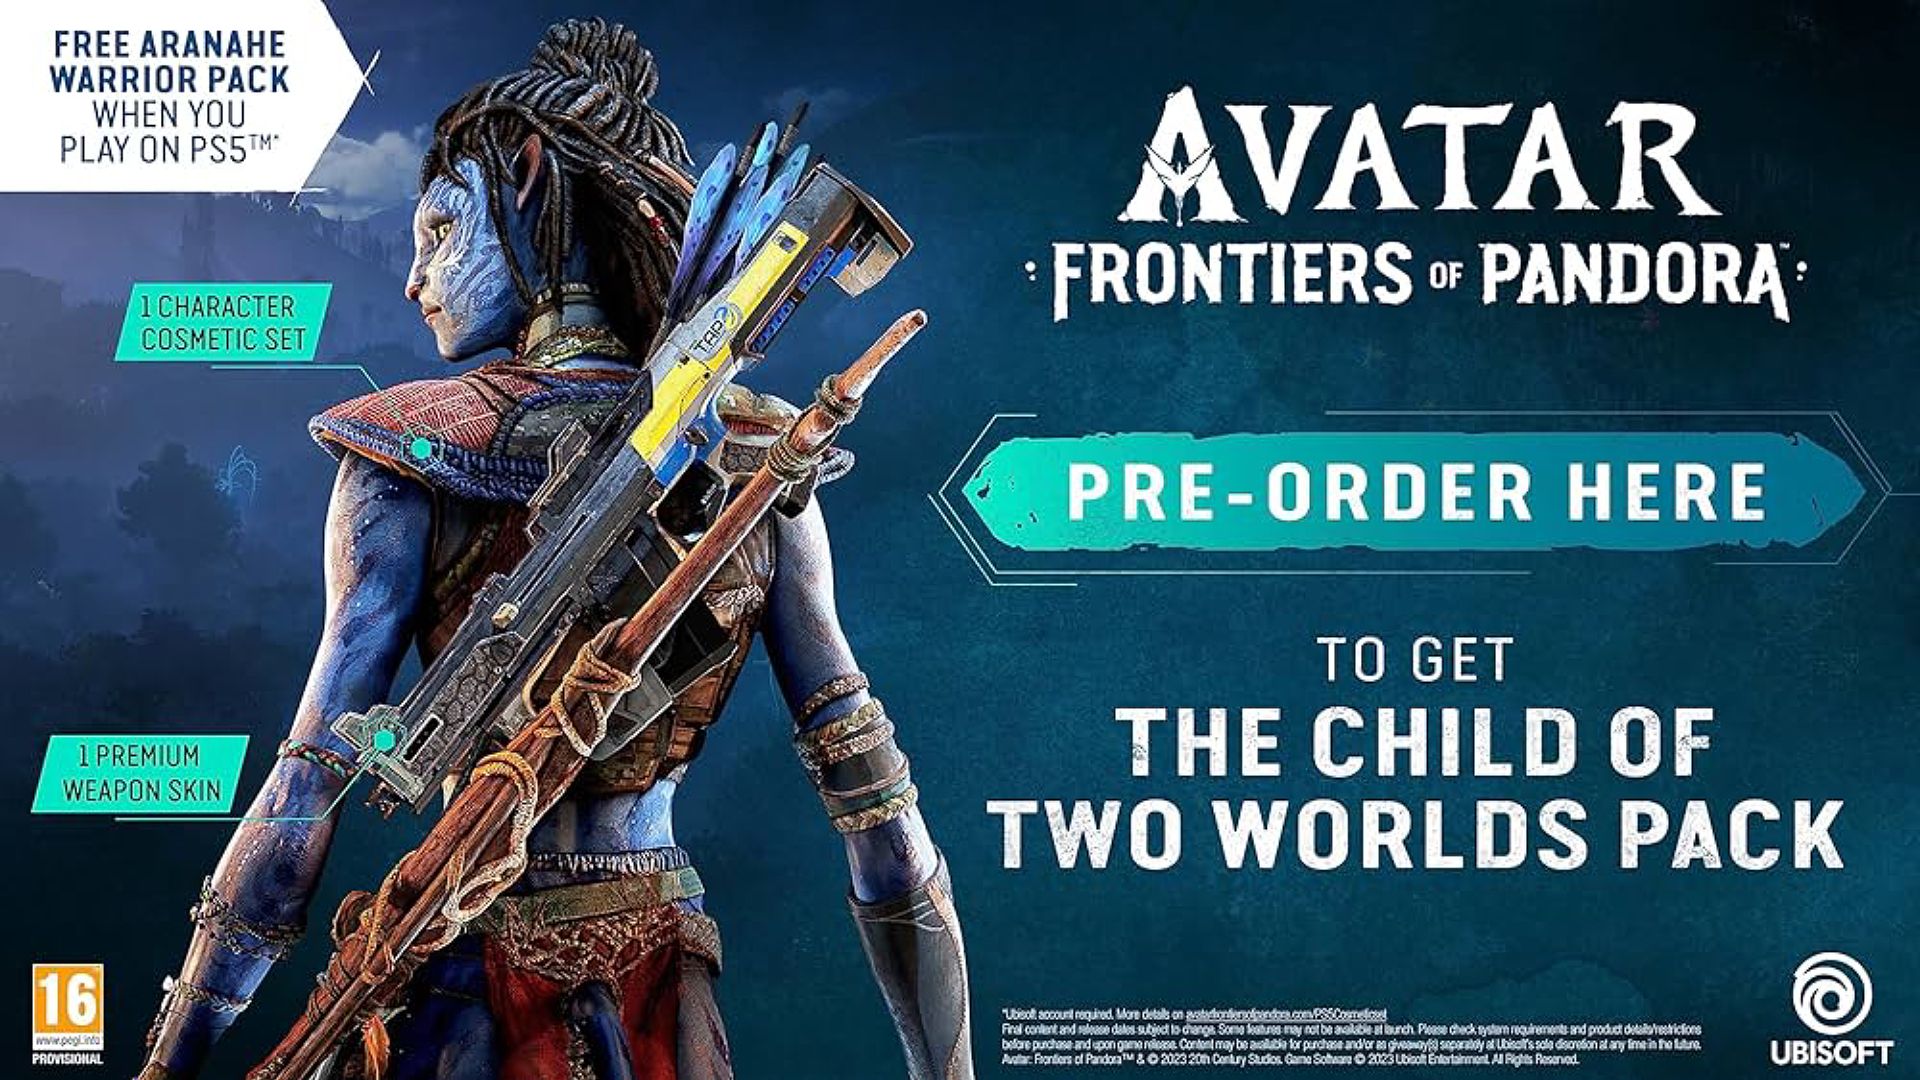 The Pre-order bonus for Avatar Frontiers of Pandora